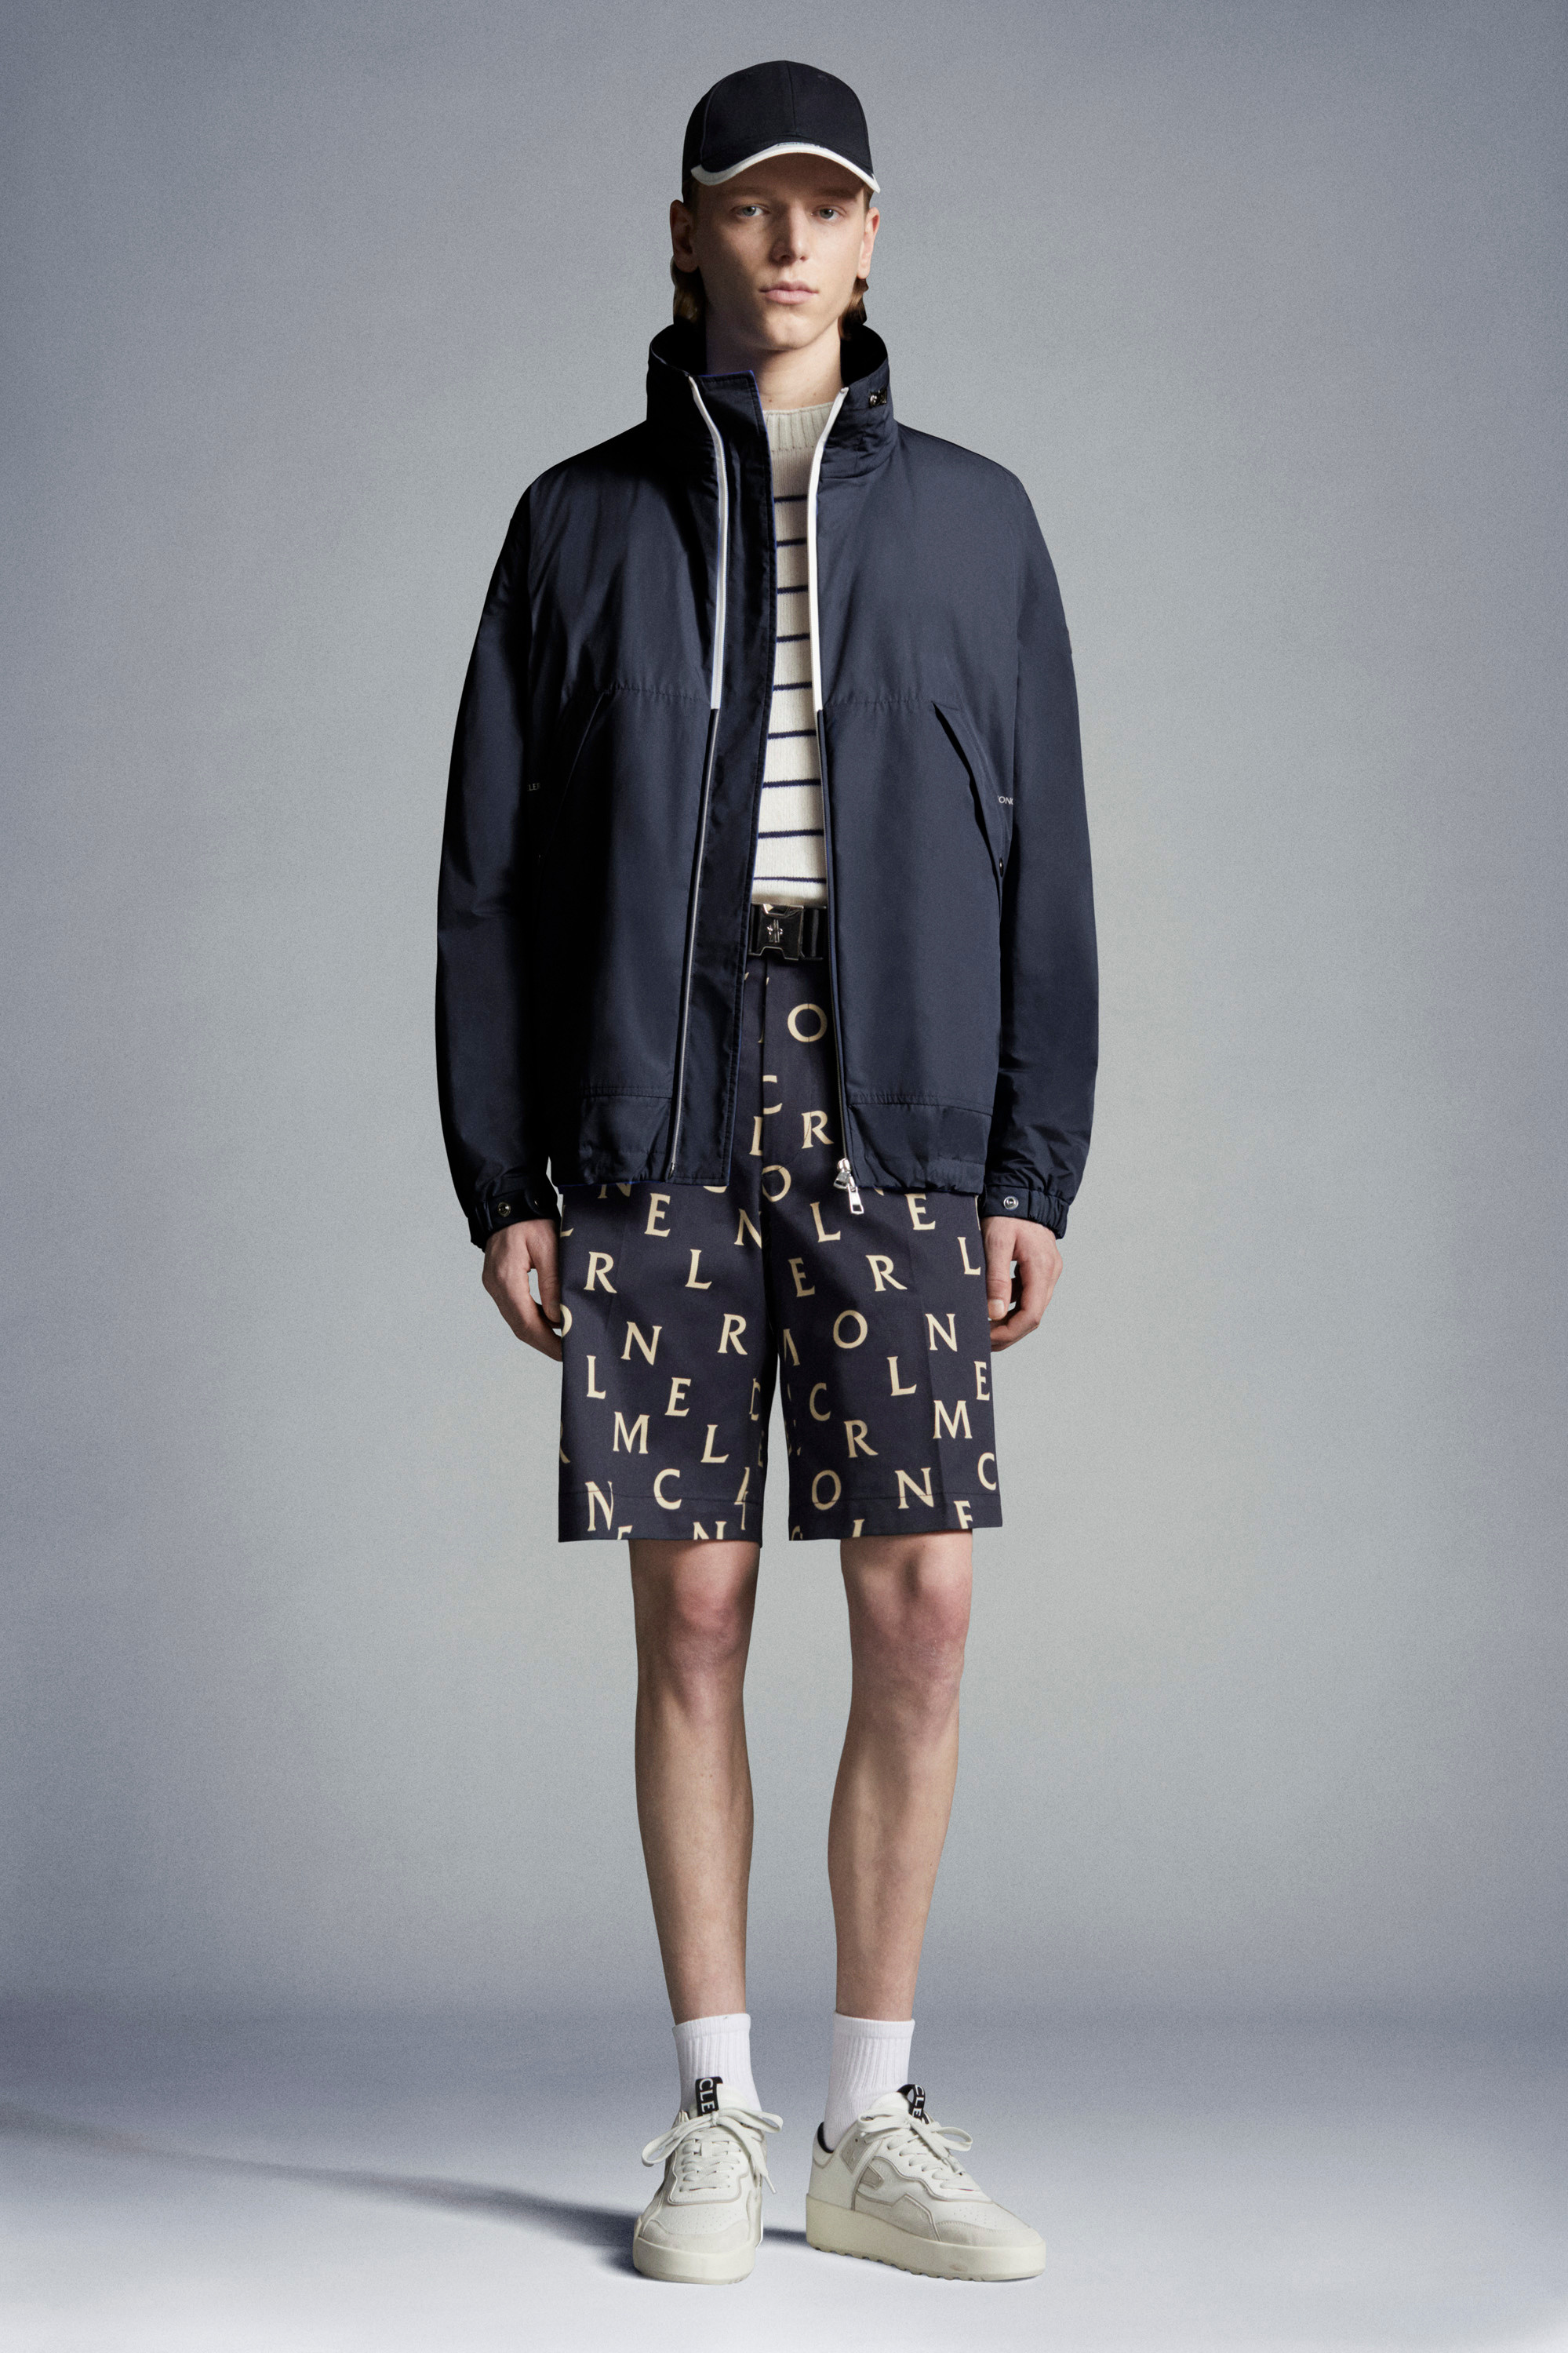 Short Down Jackets for Men - Outerwear | Moncler MT